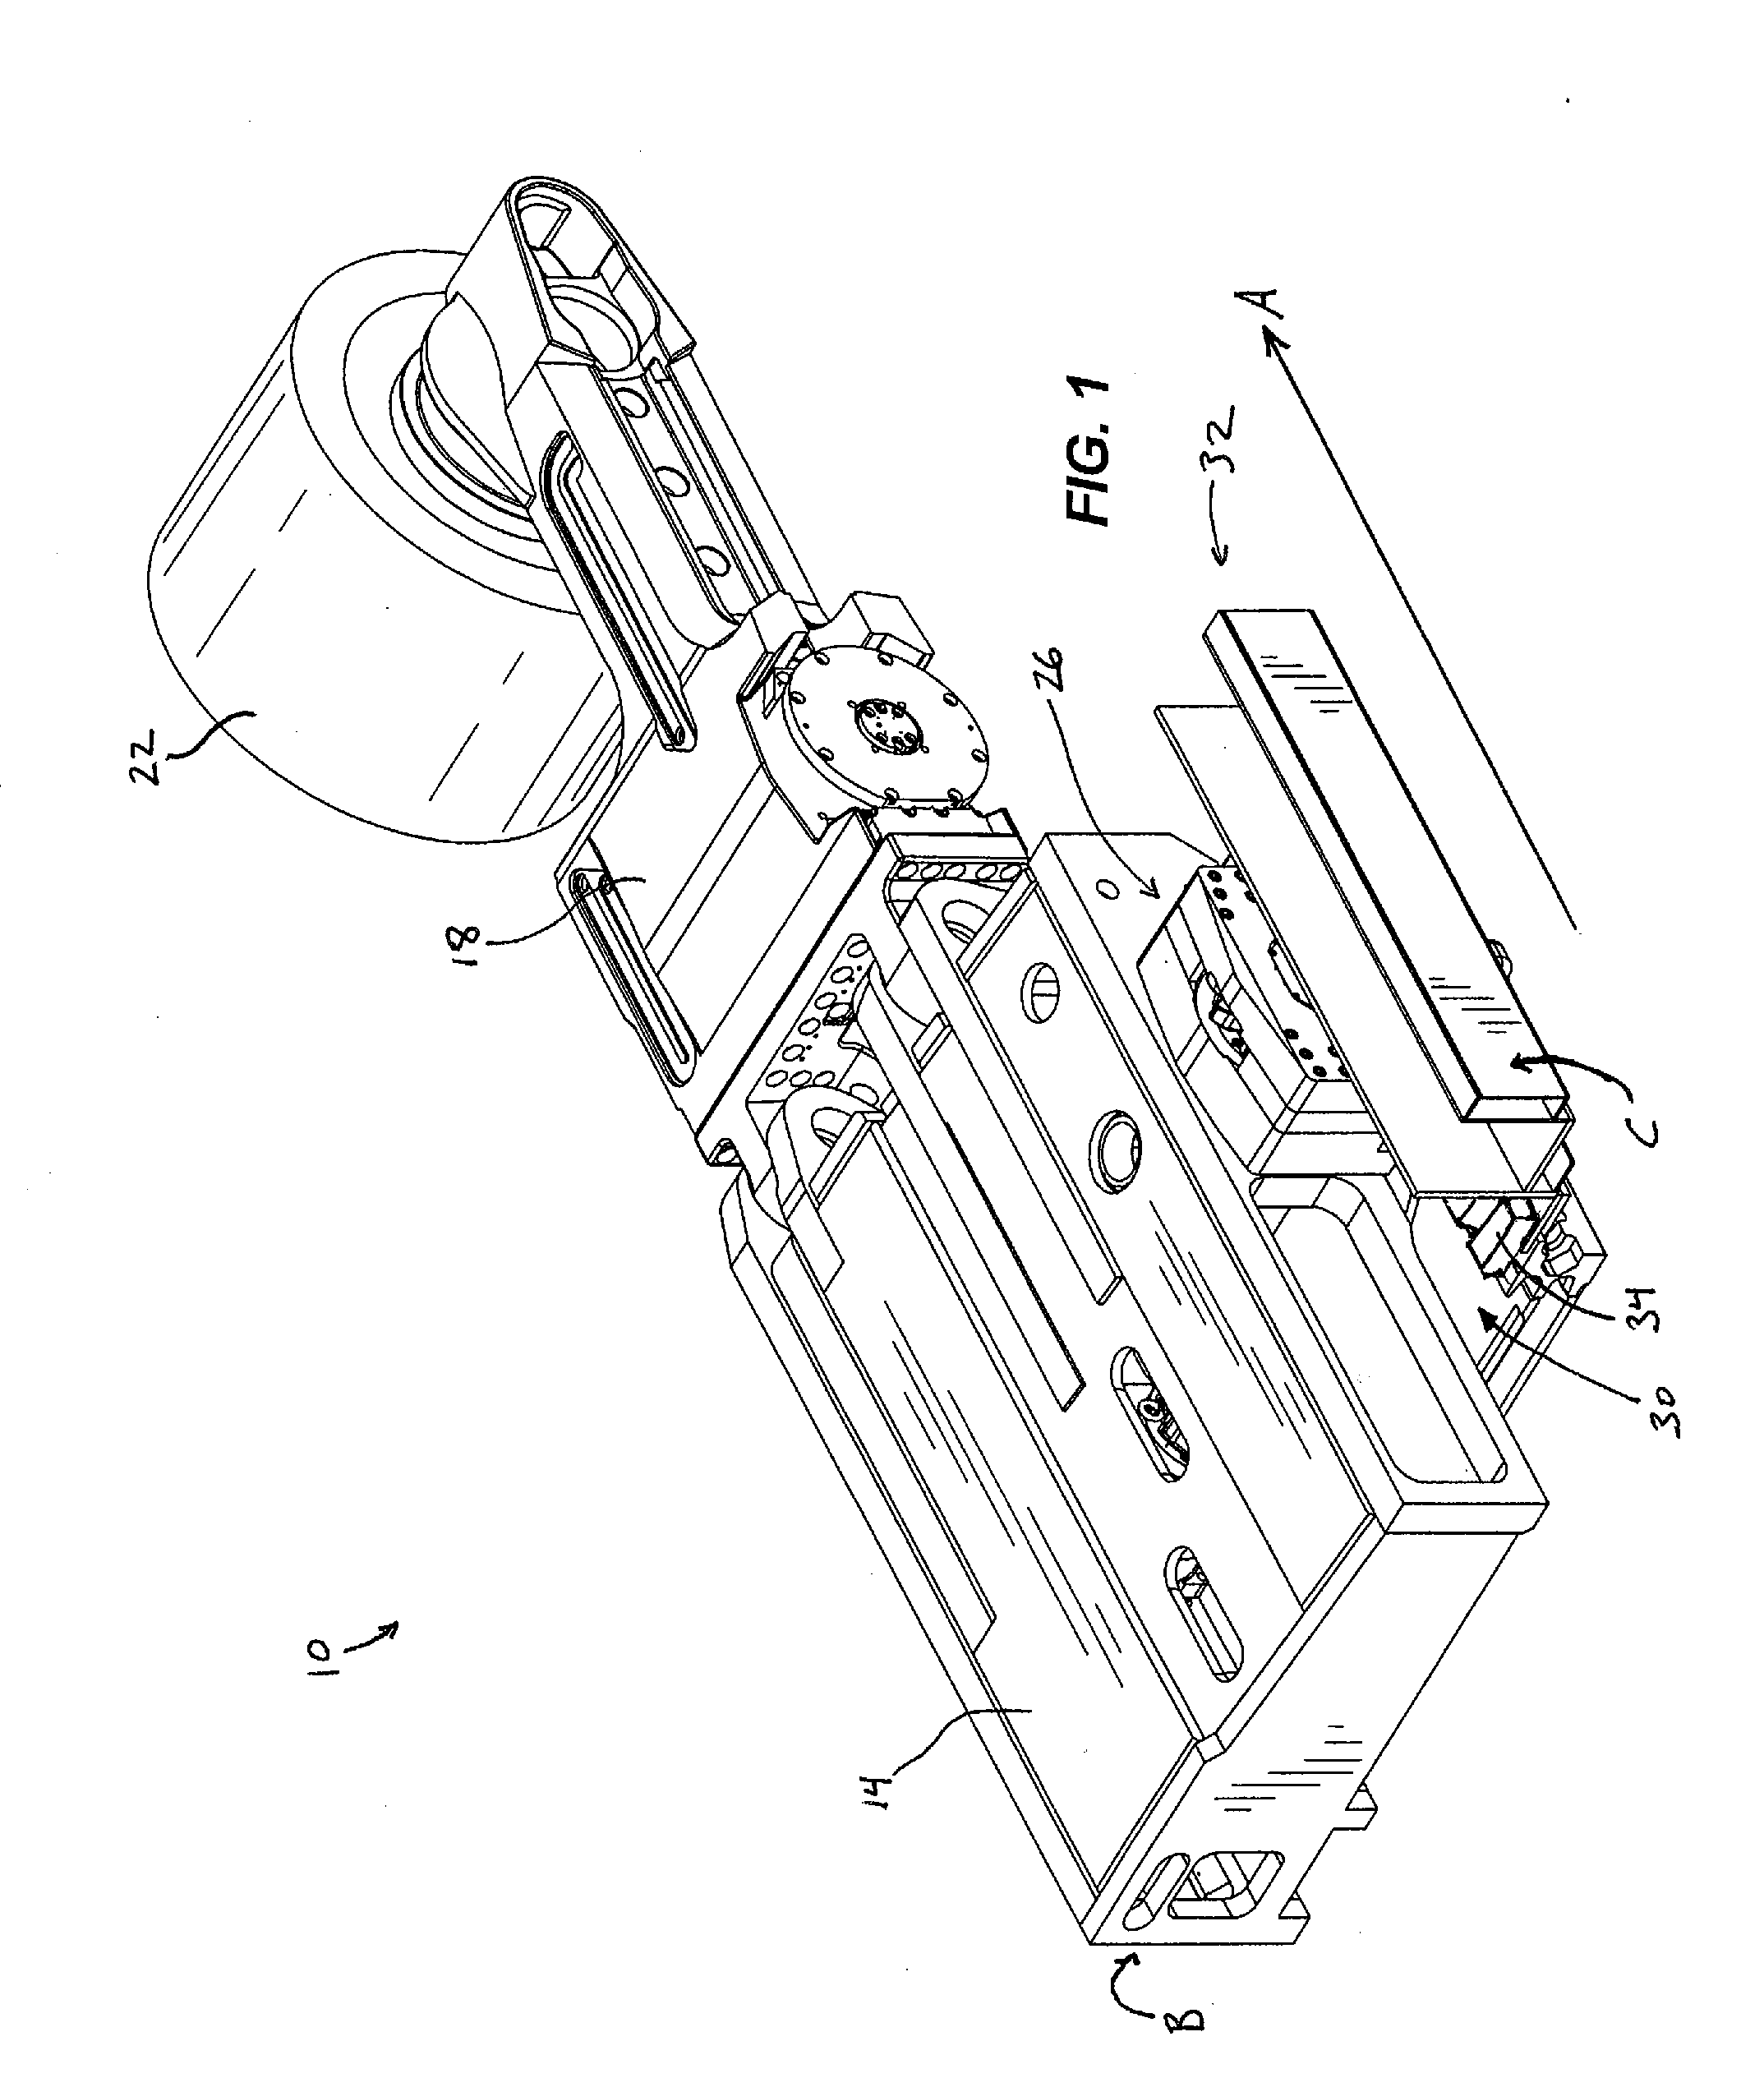 Drive mechanism for a longwall mining machine